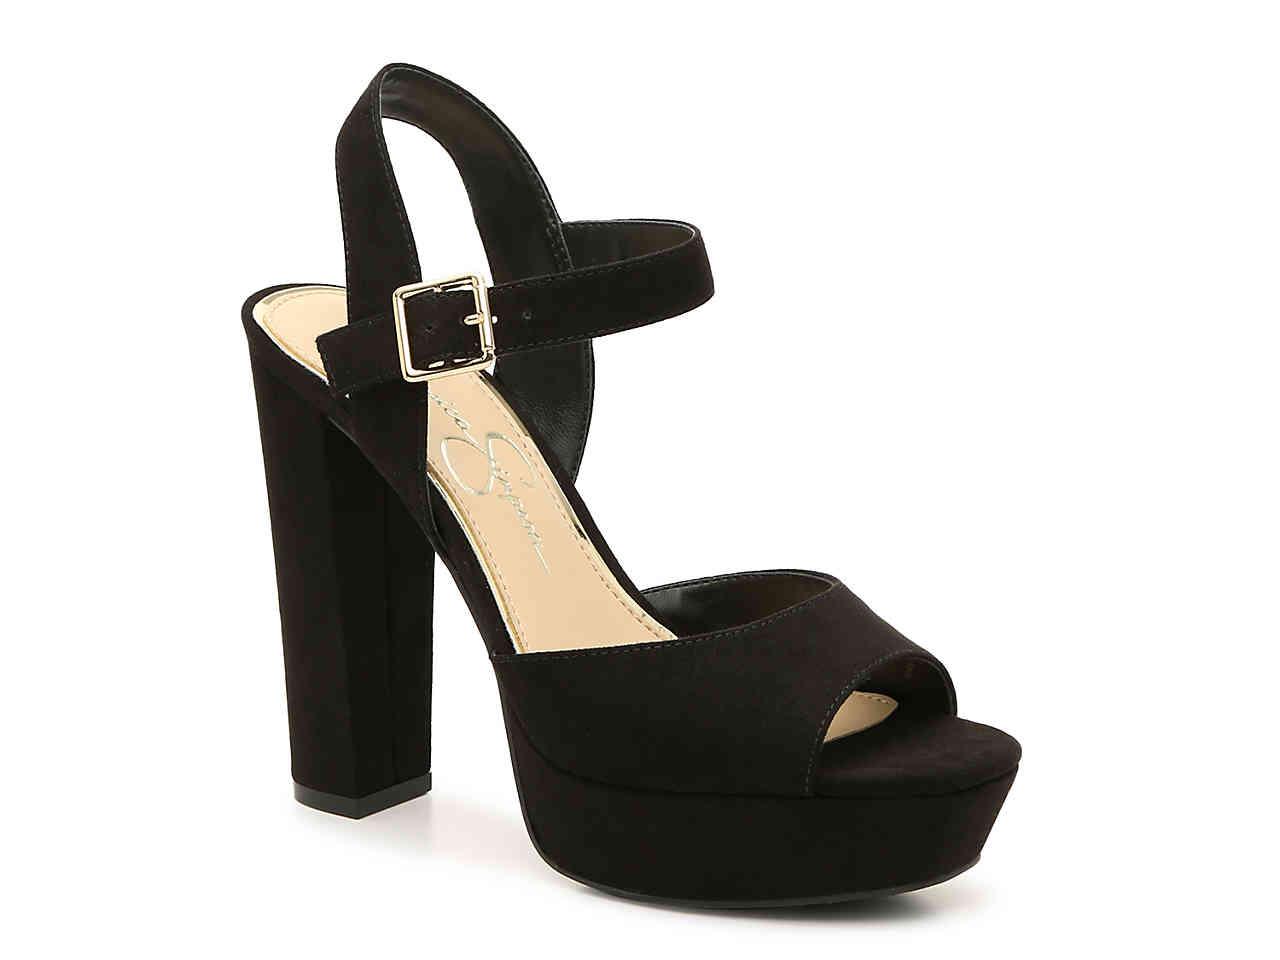 Jessica Simpson Denim Priella Platform Sandal in Black - Lyst